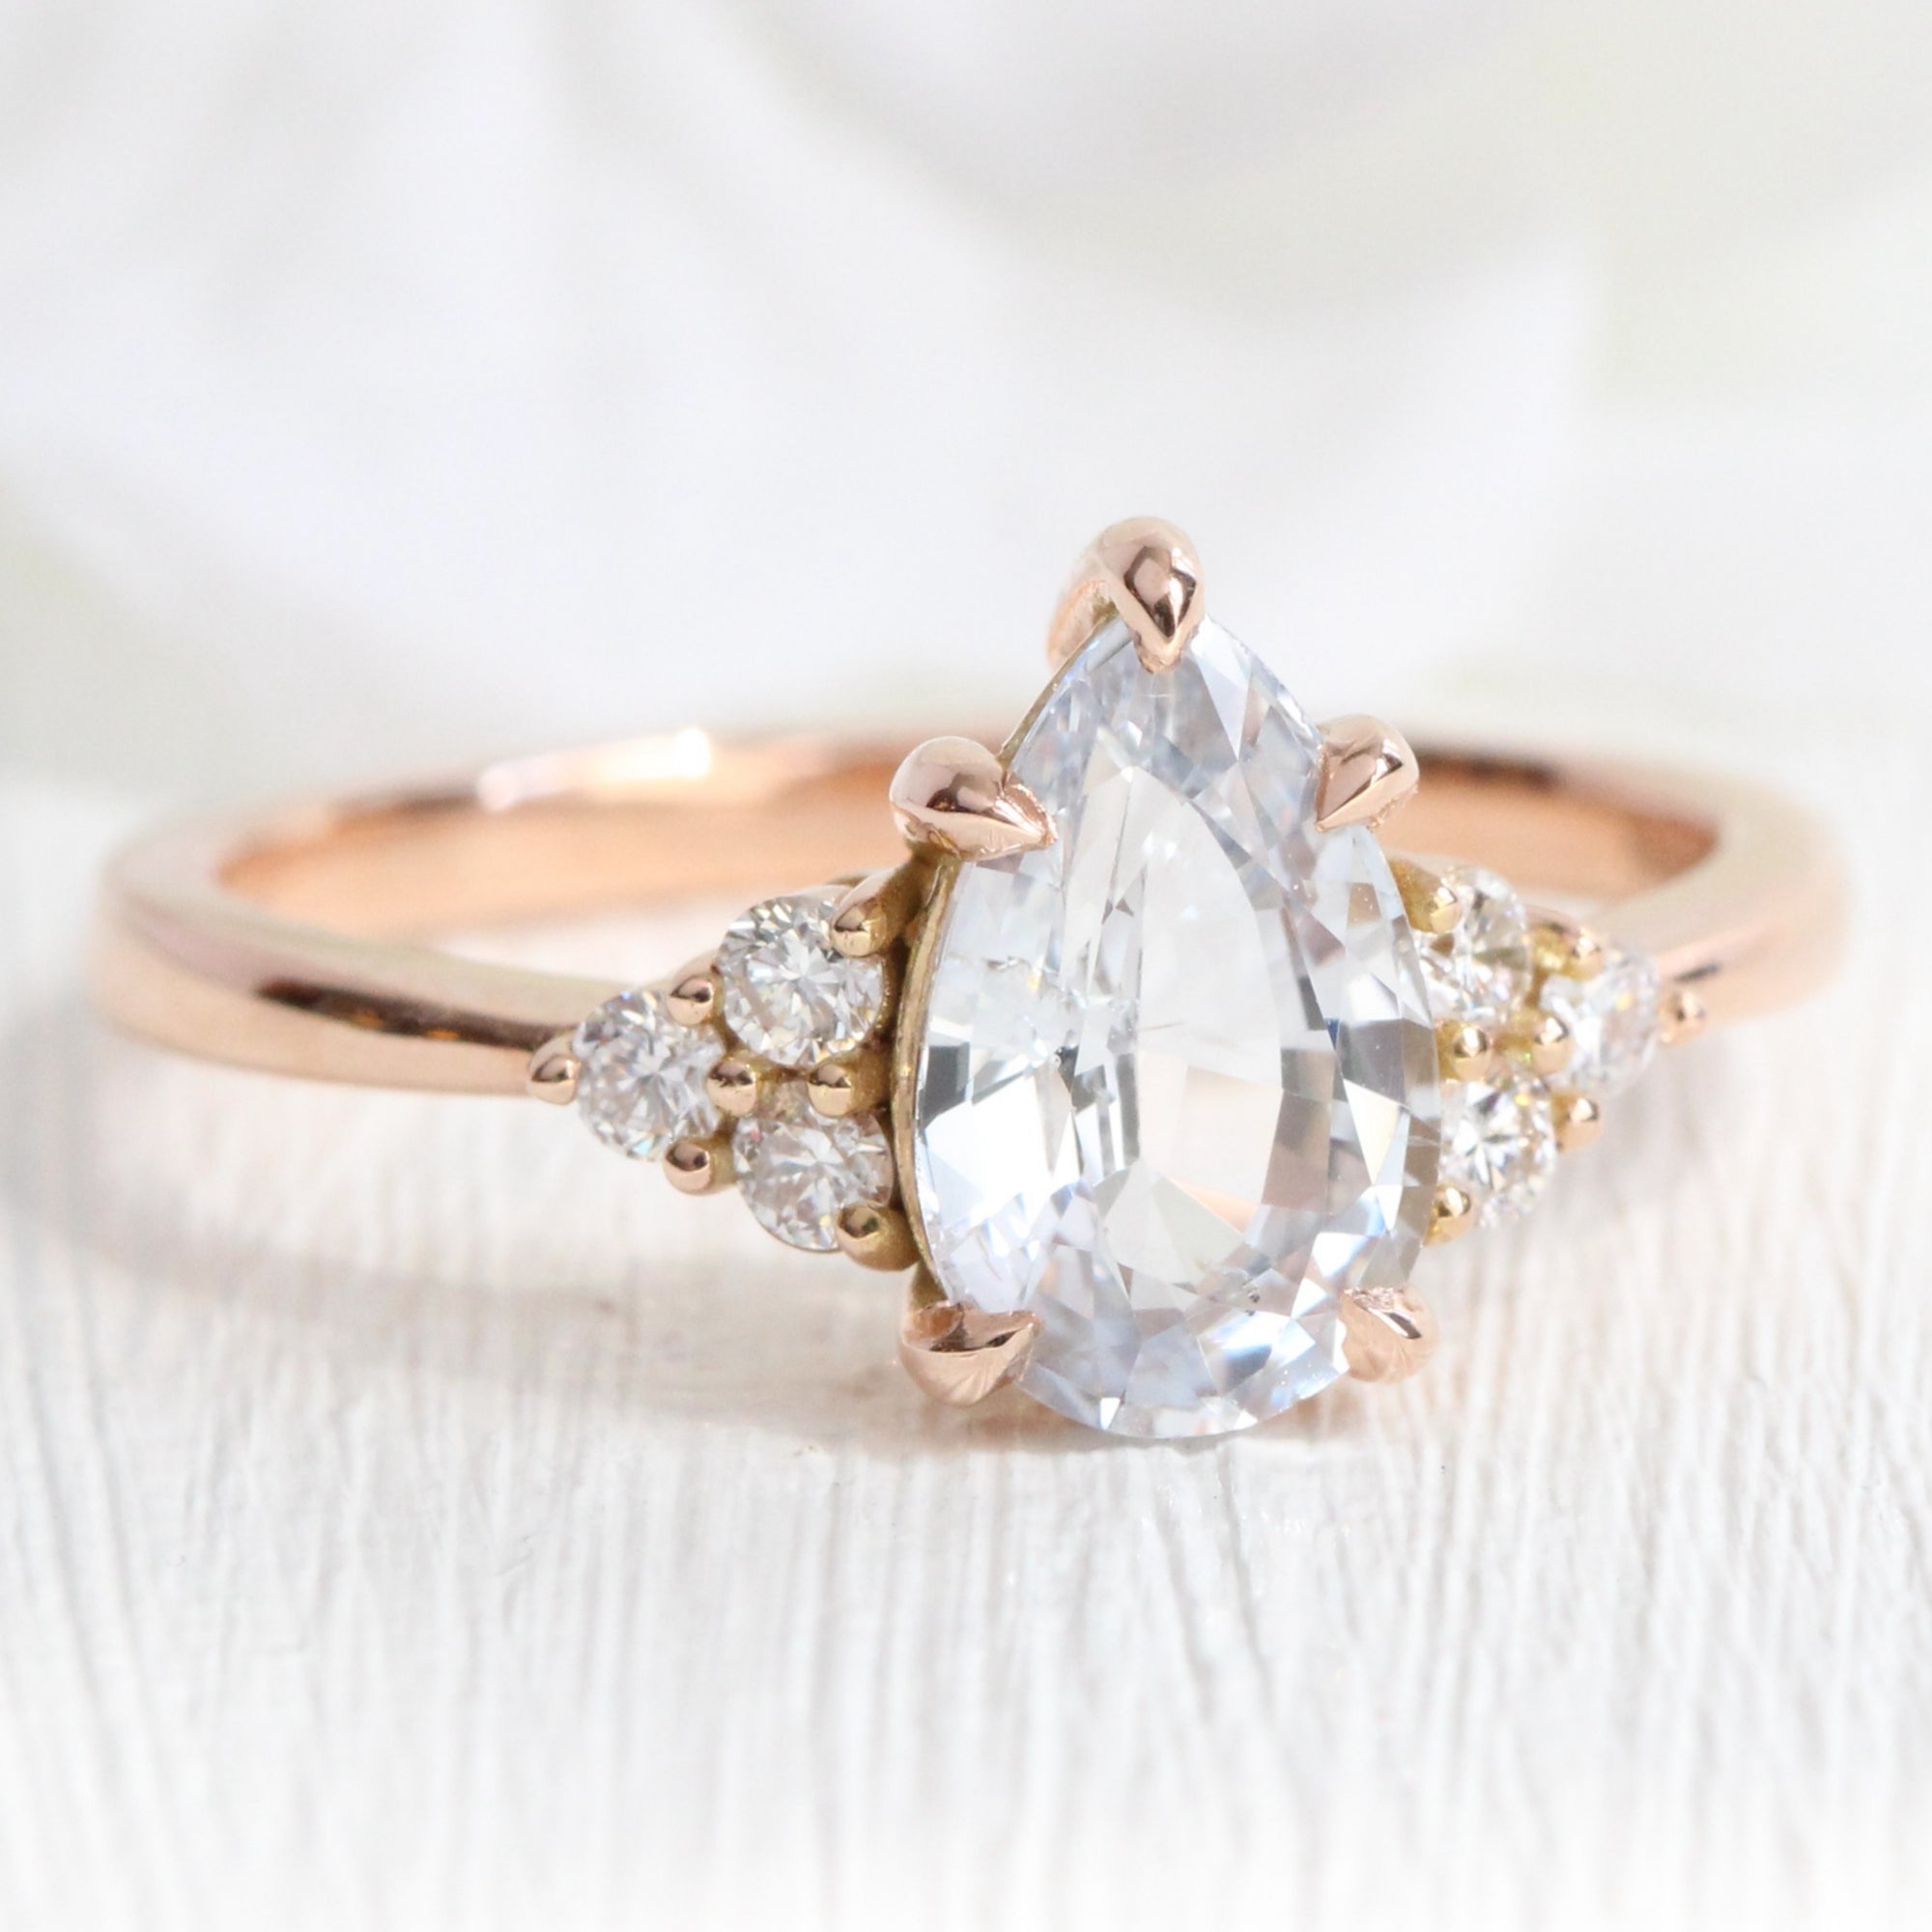 Pear cut white sapphire ring rose gold 3 stone diamond ring la more design jewelry